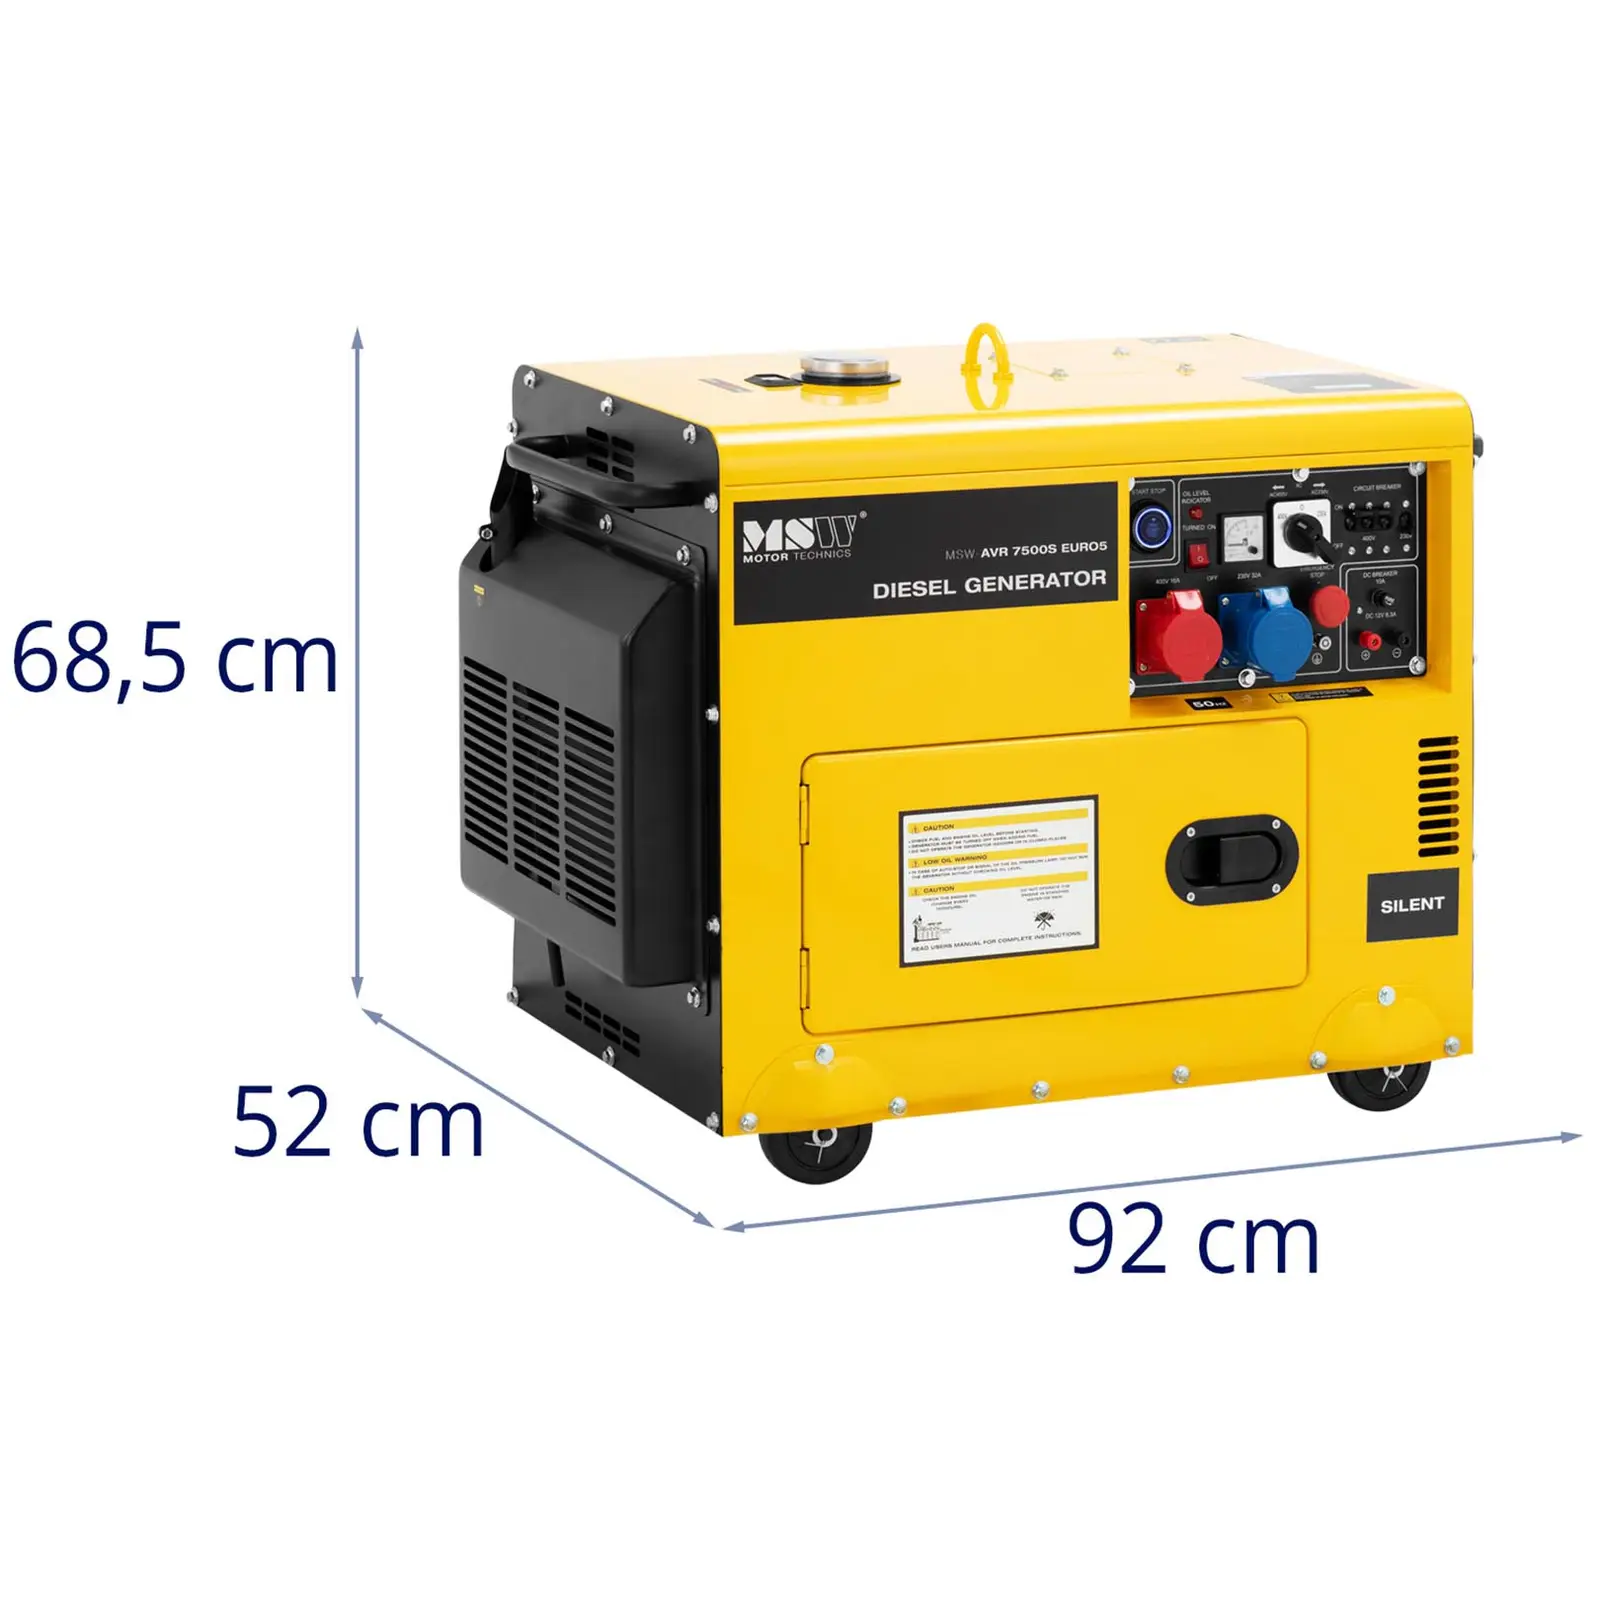 Dieselgenerator - 6370 / 7500 W - 16 L - 230/400 V - mobil - AVR - Euro 5